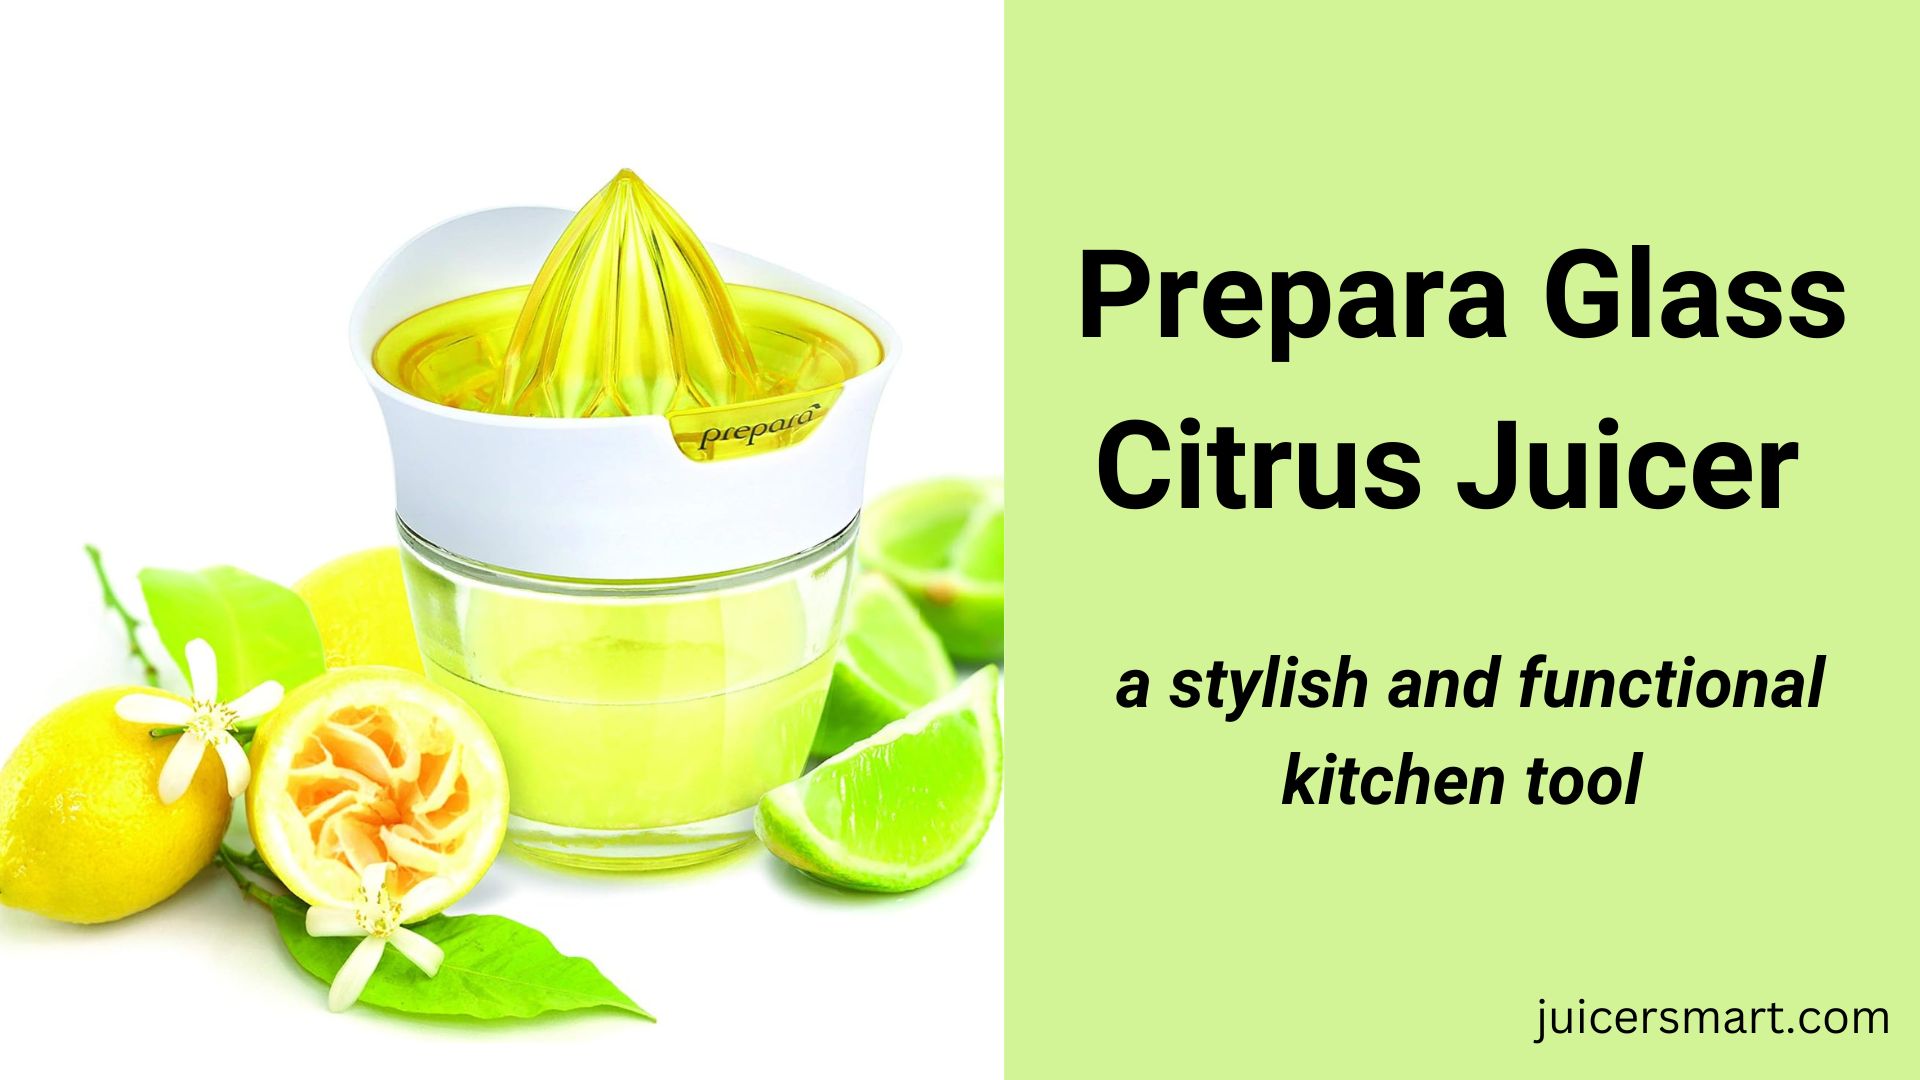 Prepara Glass Citrus Juicer